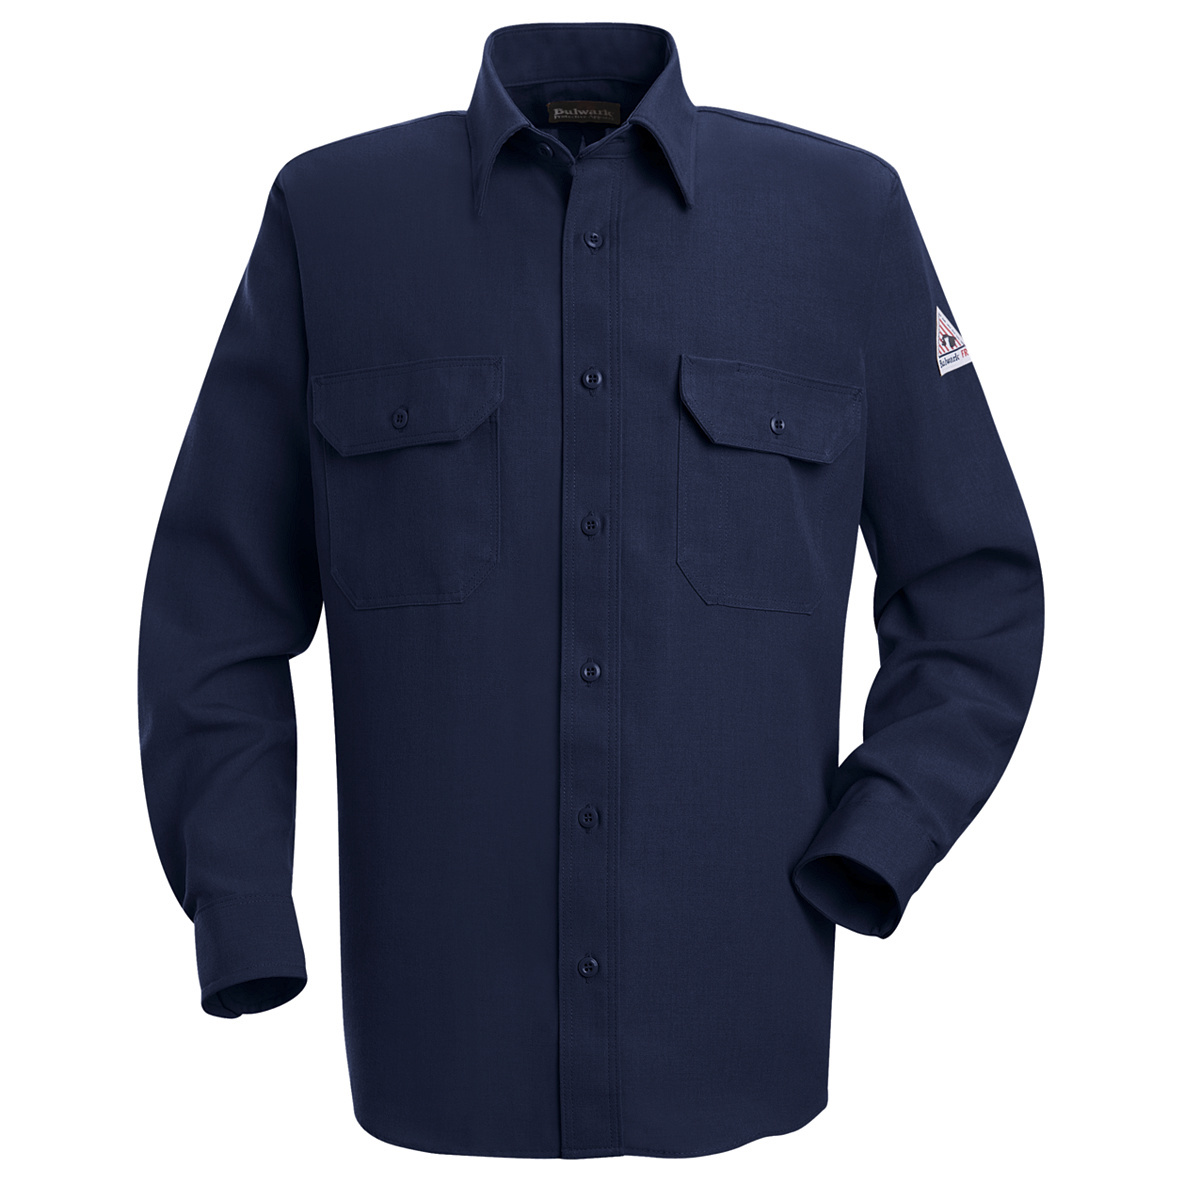 Bulwark® 3X Regular Navy Blue Nomex® IIIA/Nomex® Aramid/Kevlar® Aramid Flame Resistant Uniform Shirt With Button Front Closure